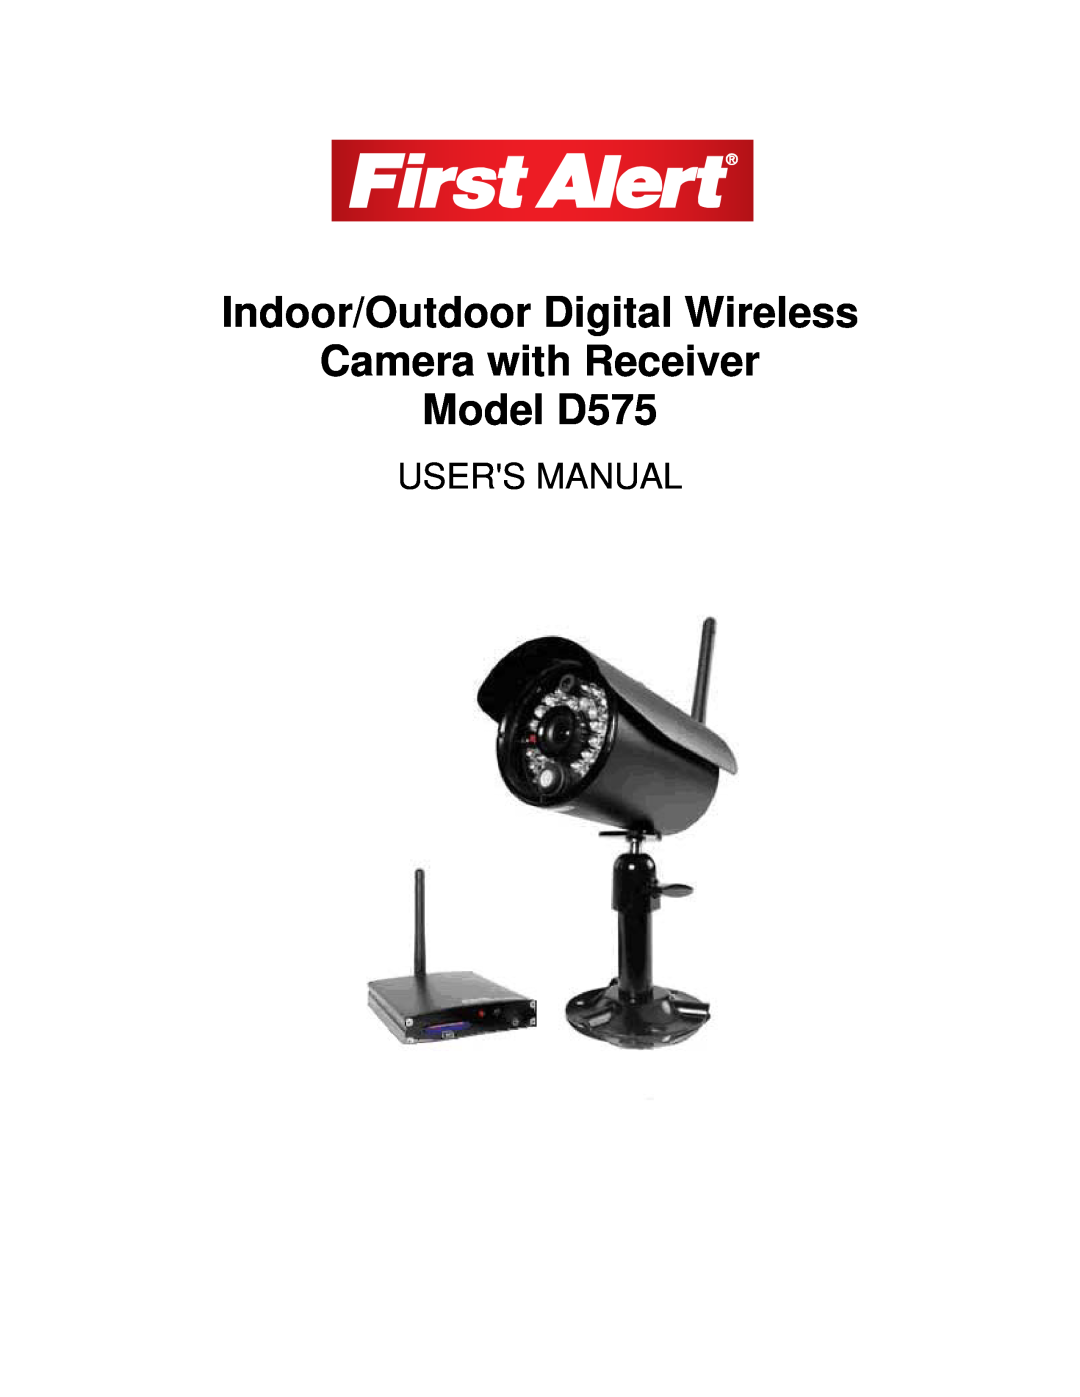 First Alert user manual Indoor/Outdoor Digital Wireless, Camera with Receiver Model D575 